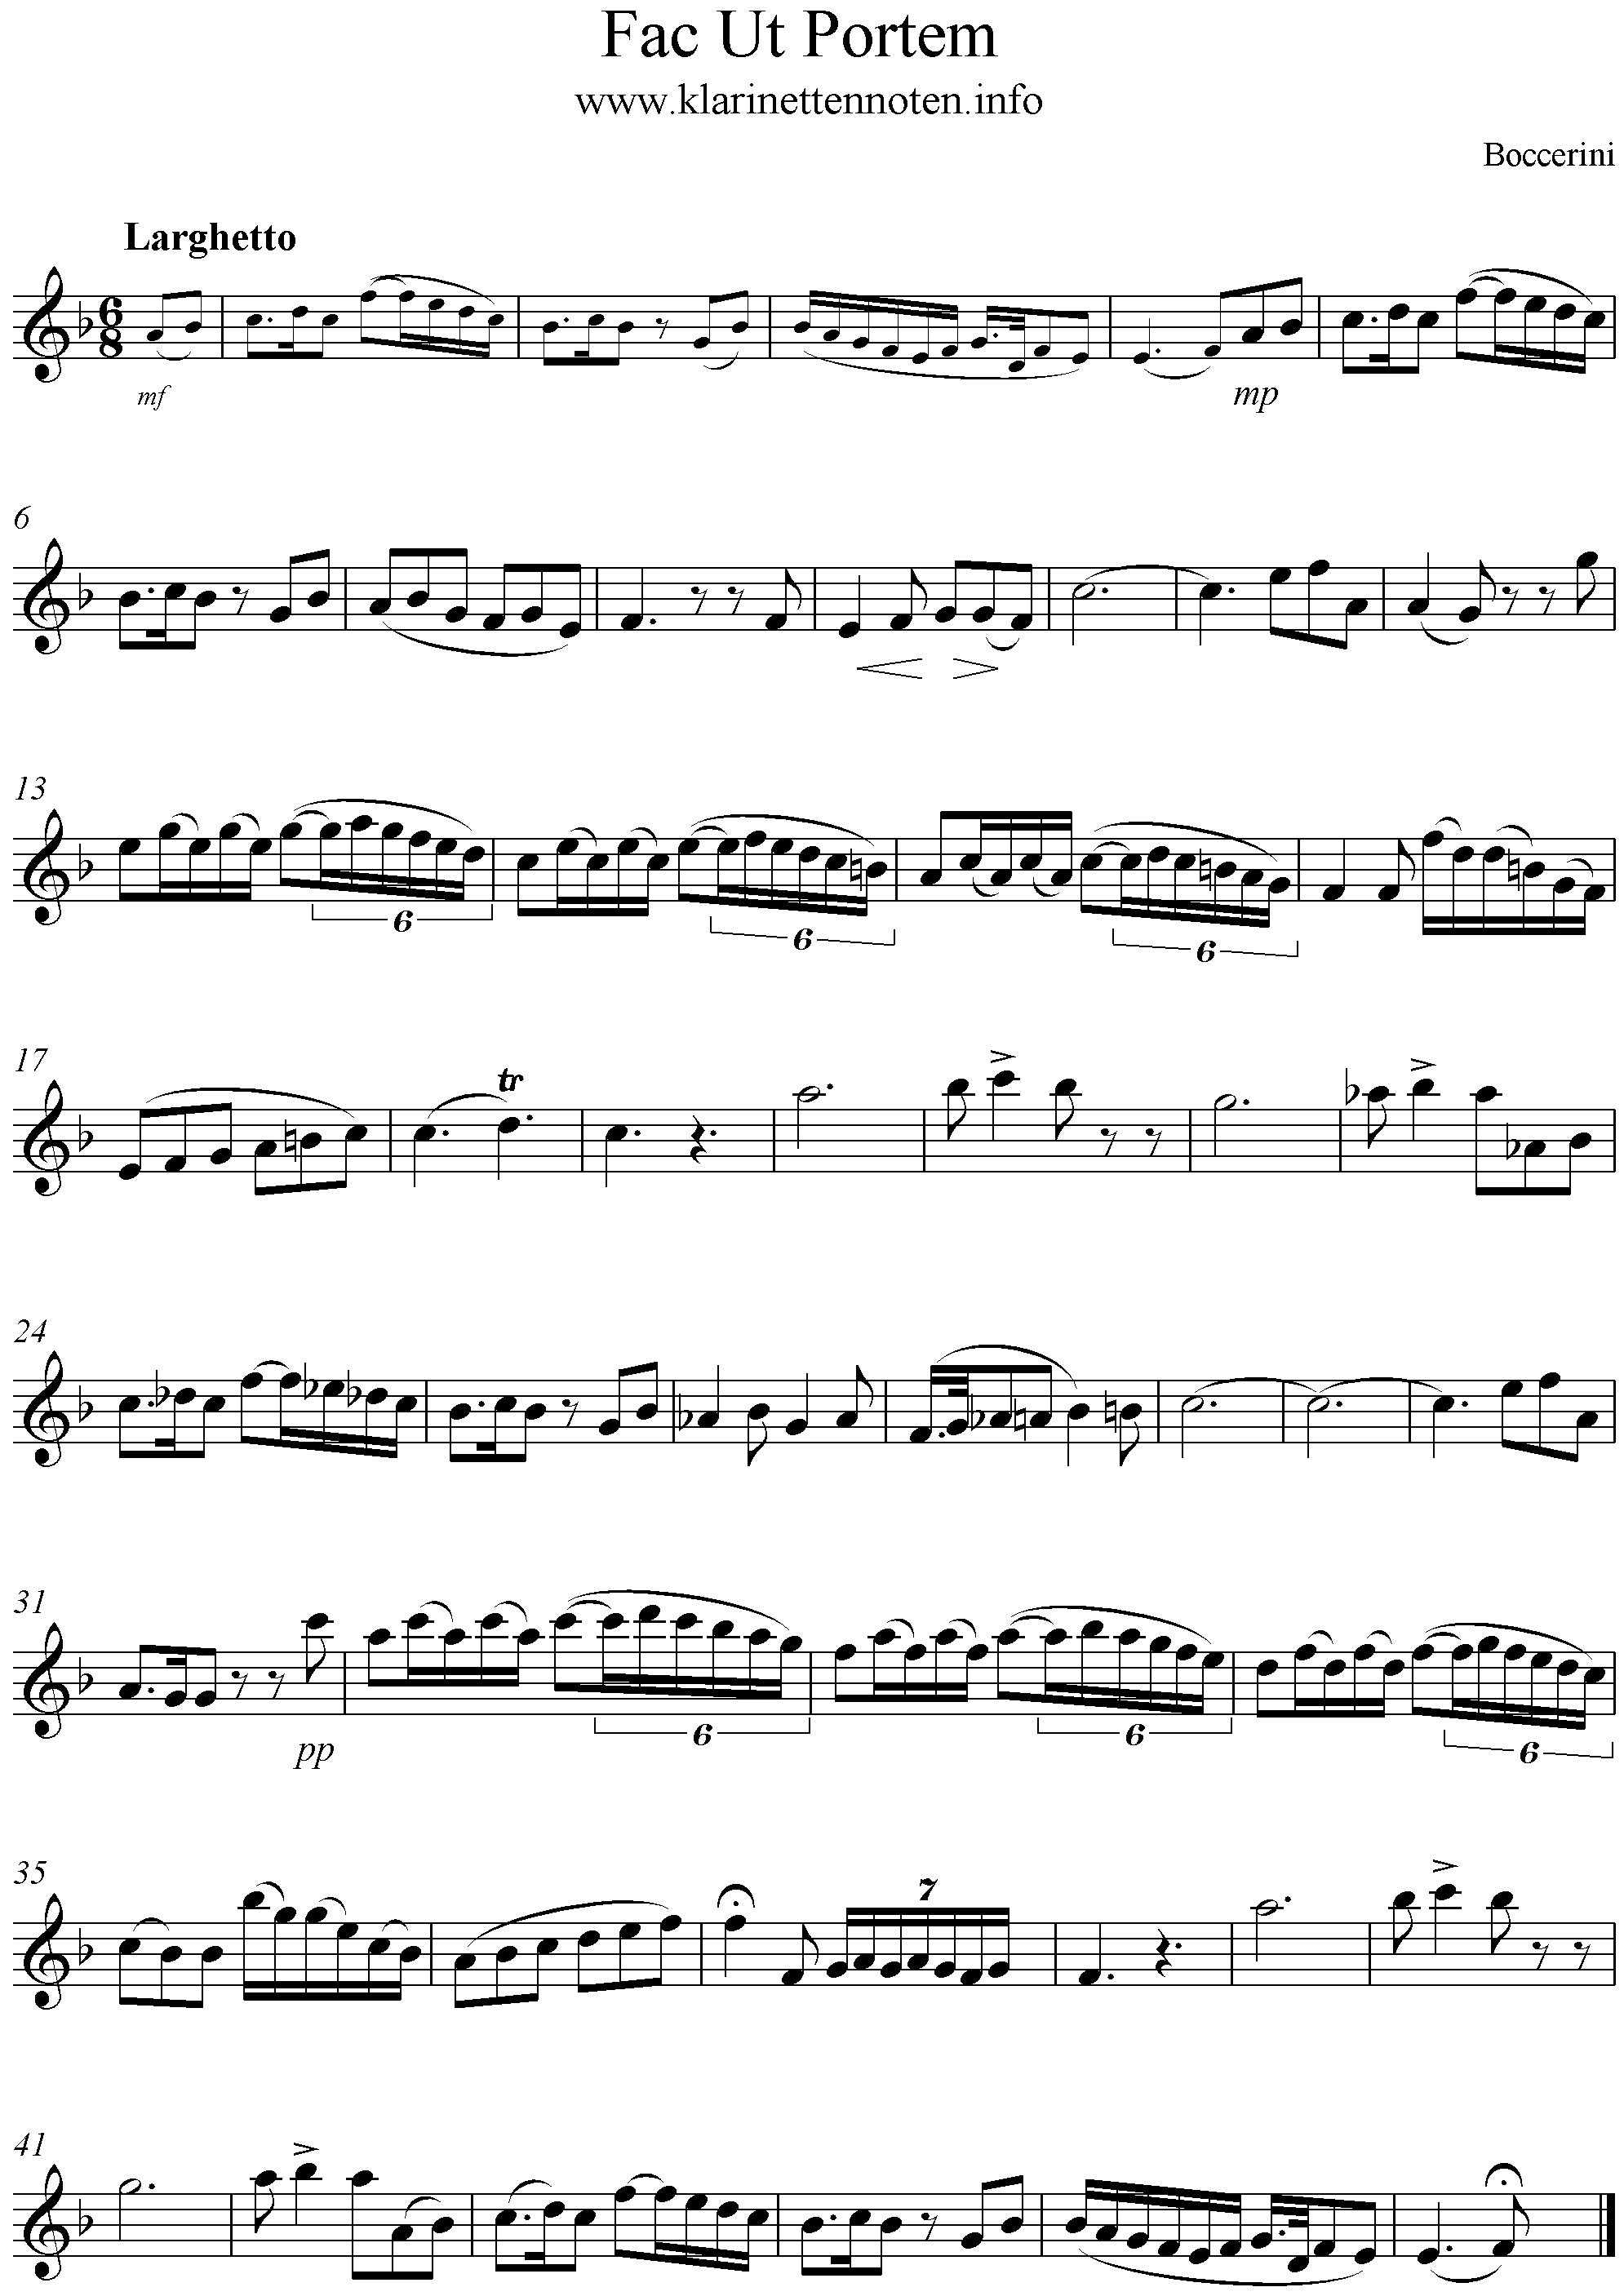 Noten Klarinette, Clarinet, Fac Ut Portem Boccerini